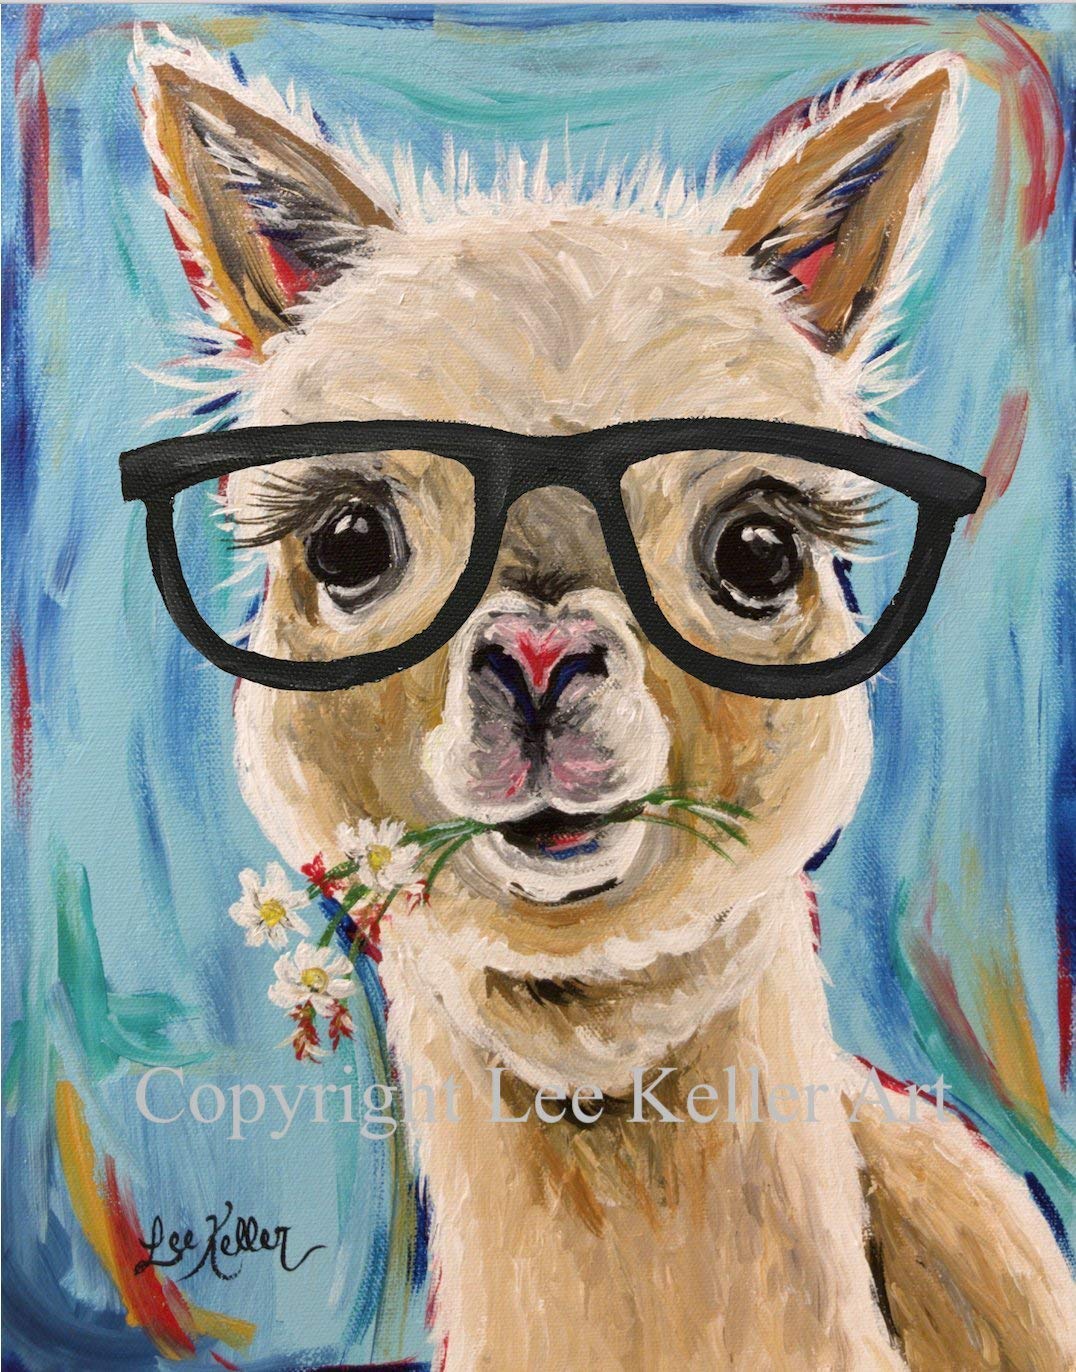 High-Quality Alpaca Artwork for the Llama Art Lover